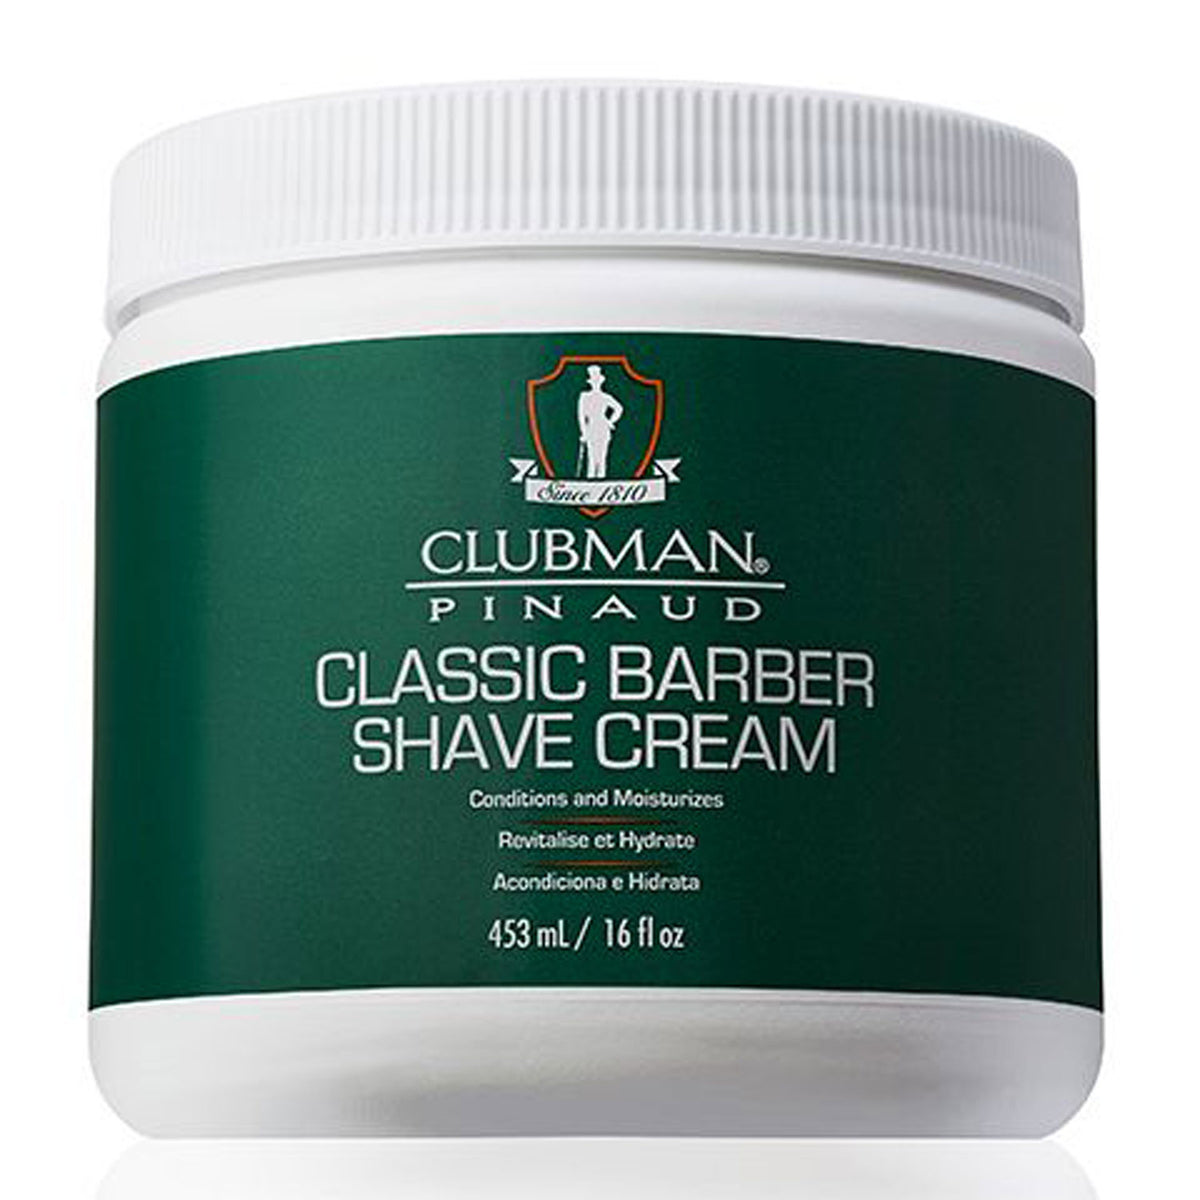 Clubman Classic Barber Shave Cream Jar 453ml - Orcadia